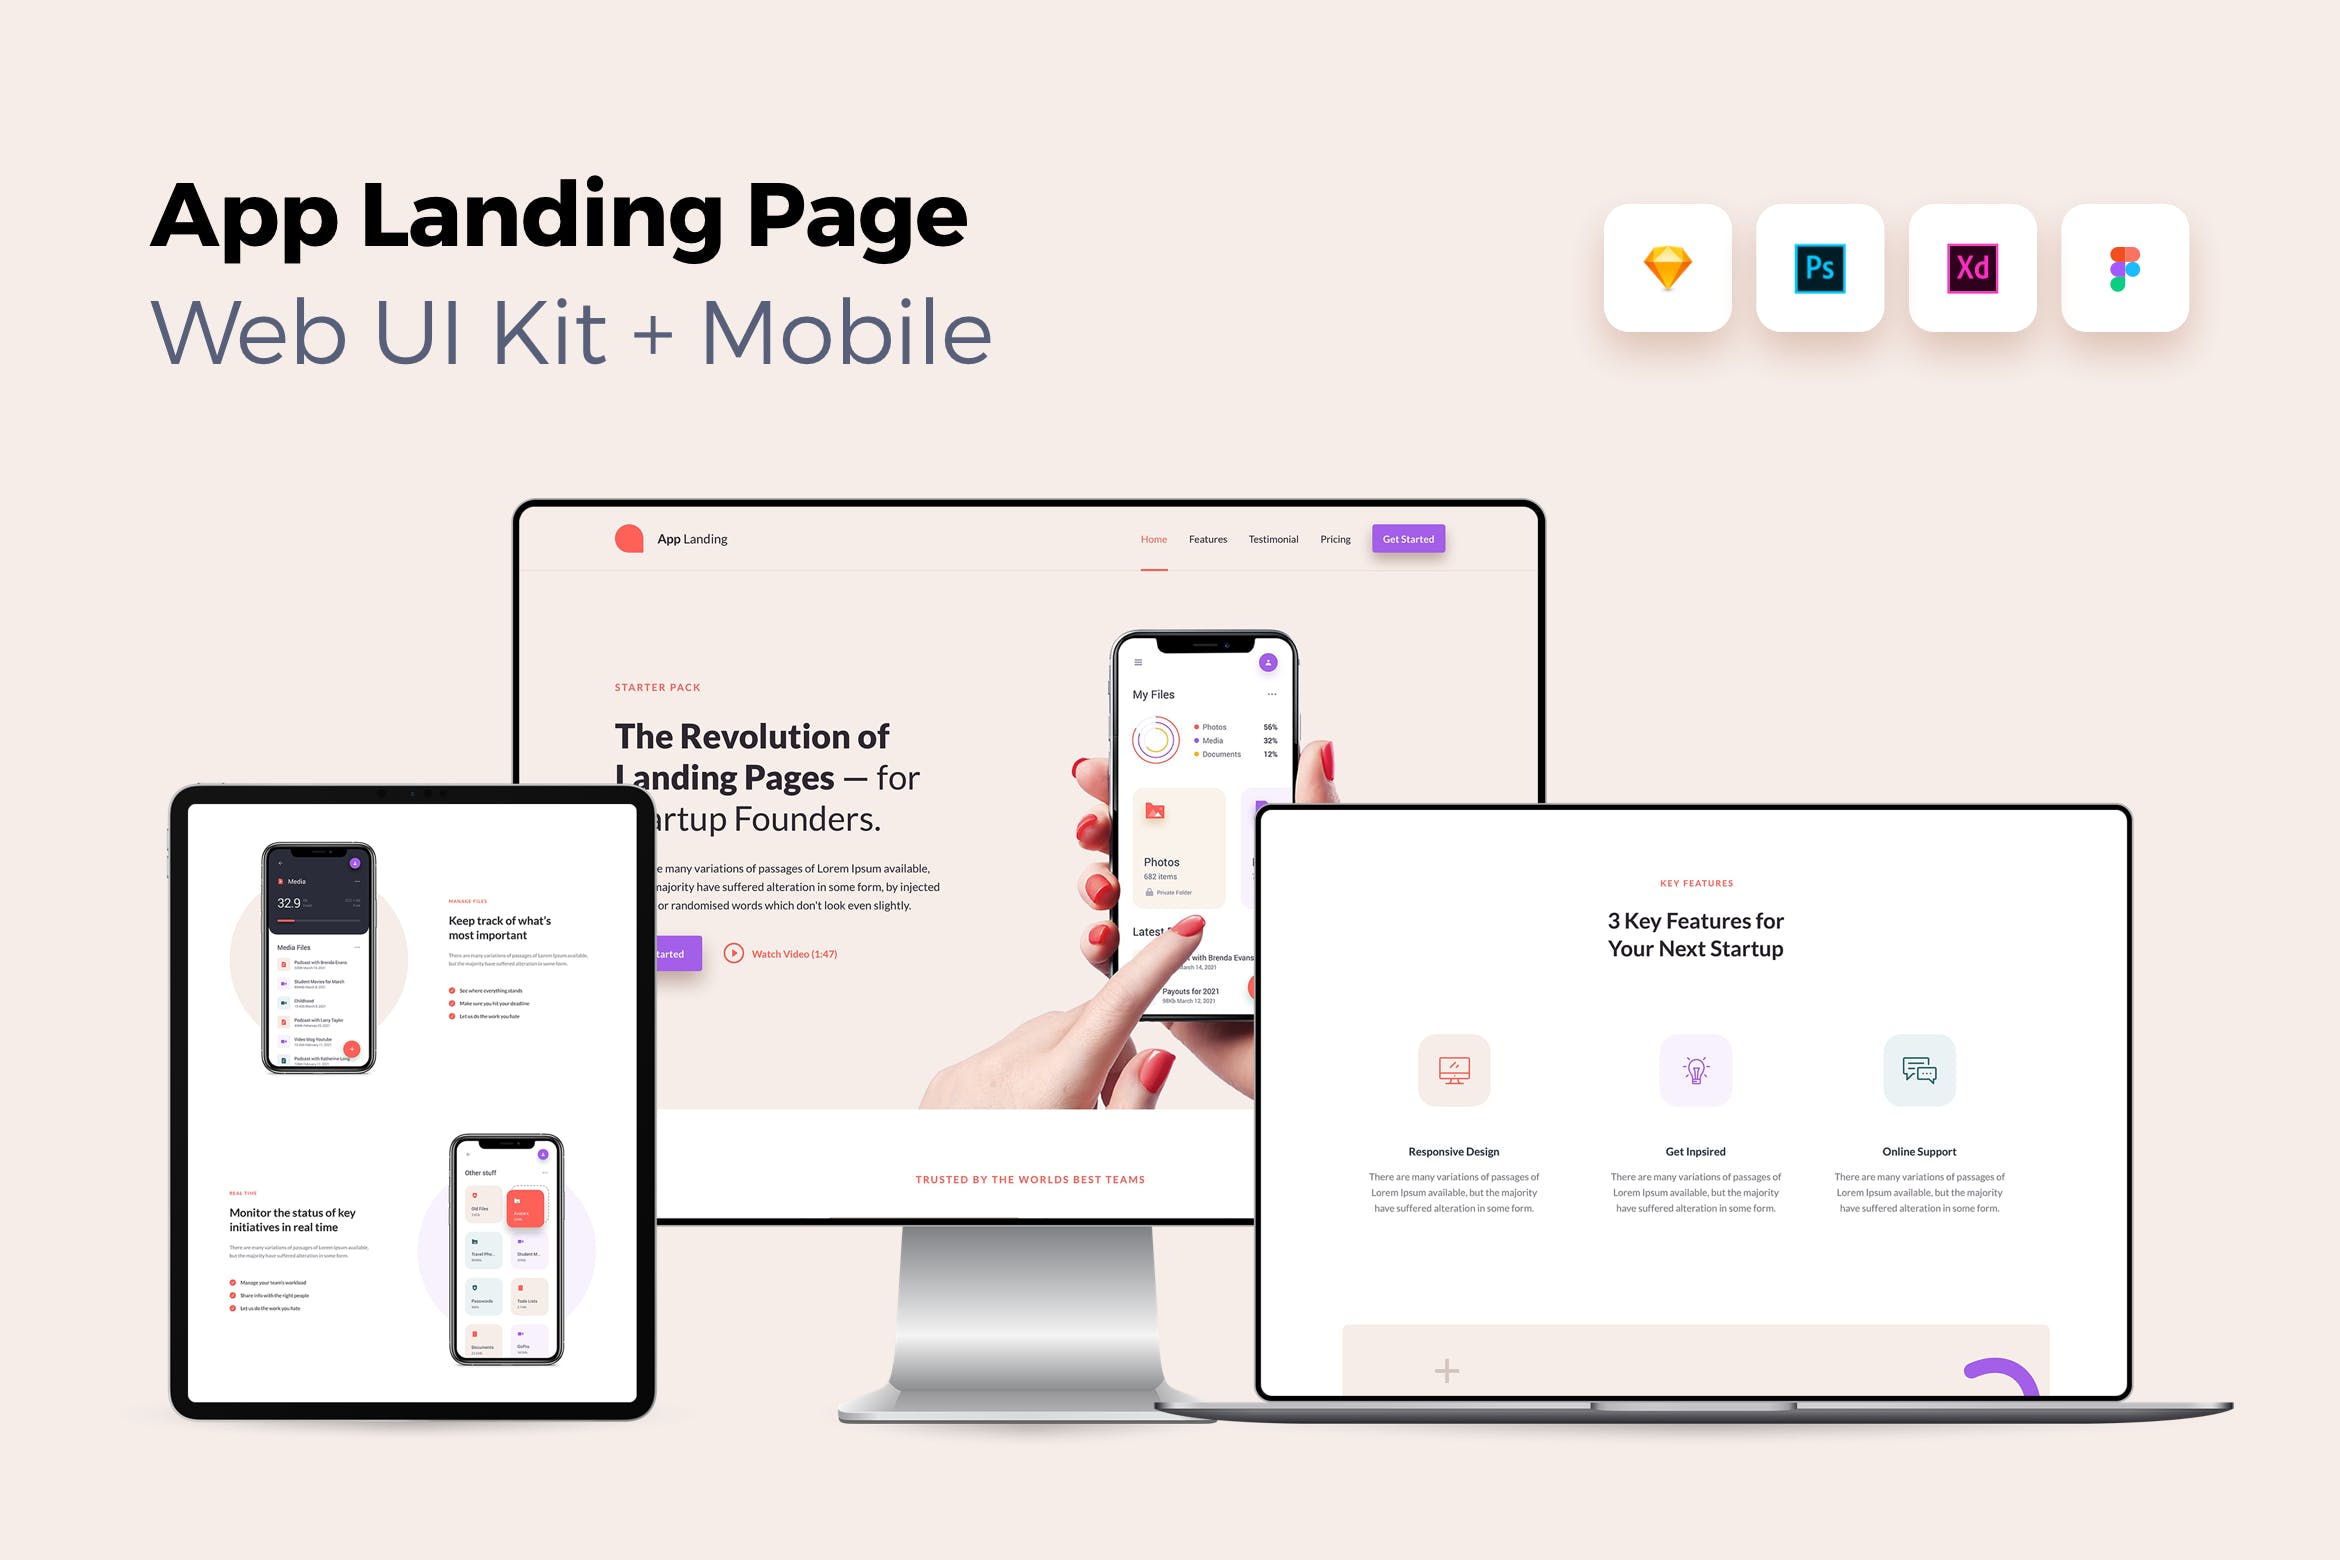 iOS端APP应用产品网站着陆页设计素材库精选套件v1 iOS App Landing Page – Web UI Kit + Mobile – 1插图